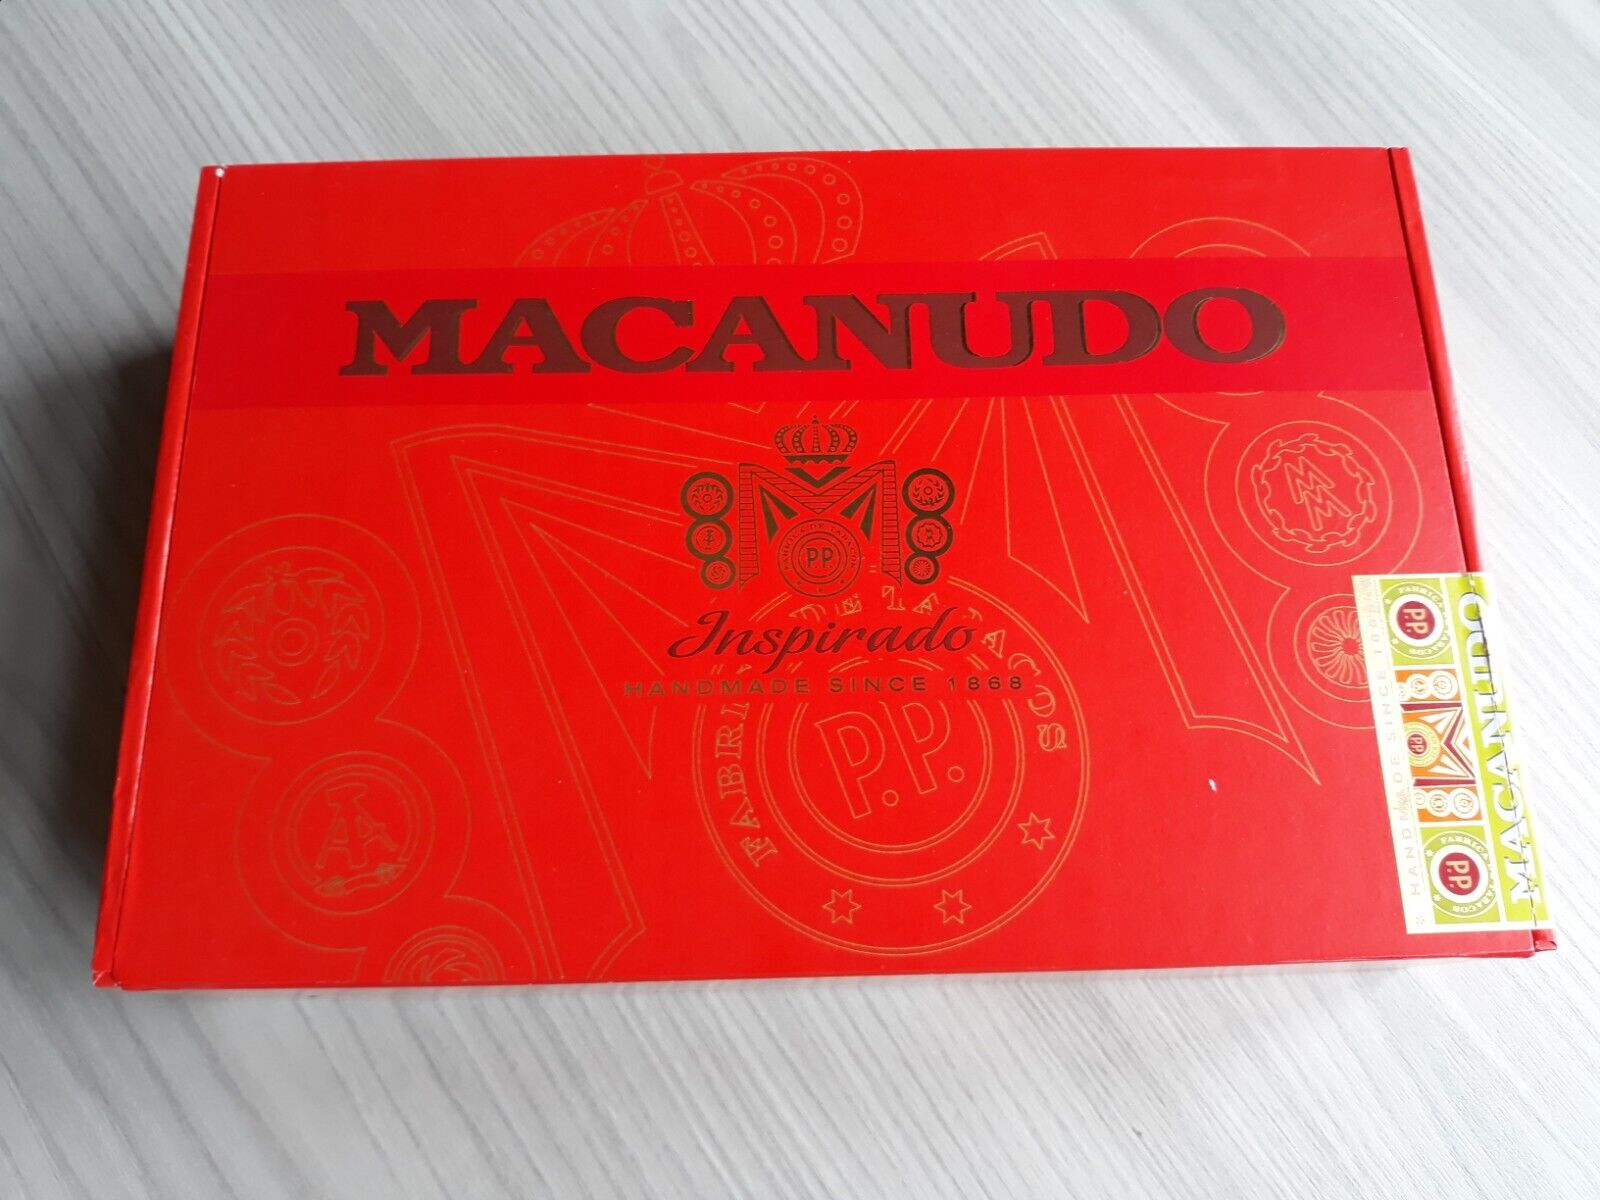 Macanudo Inspirado Orange Toro Cigar Box 